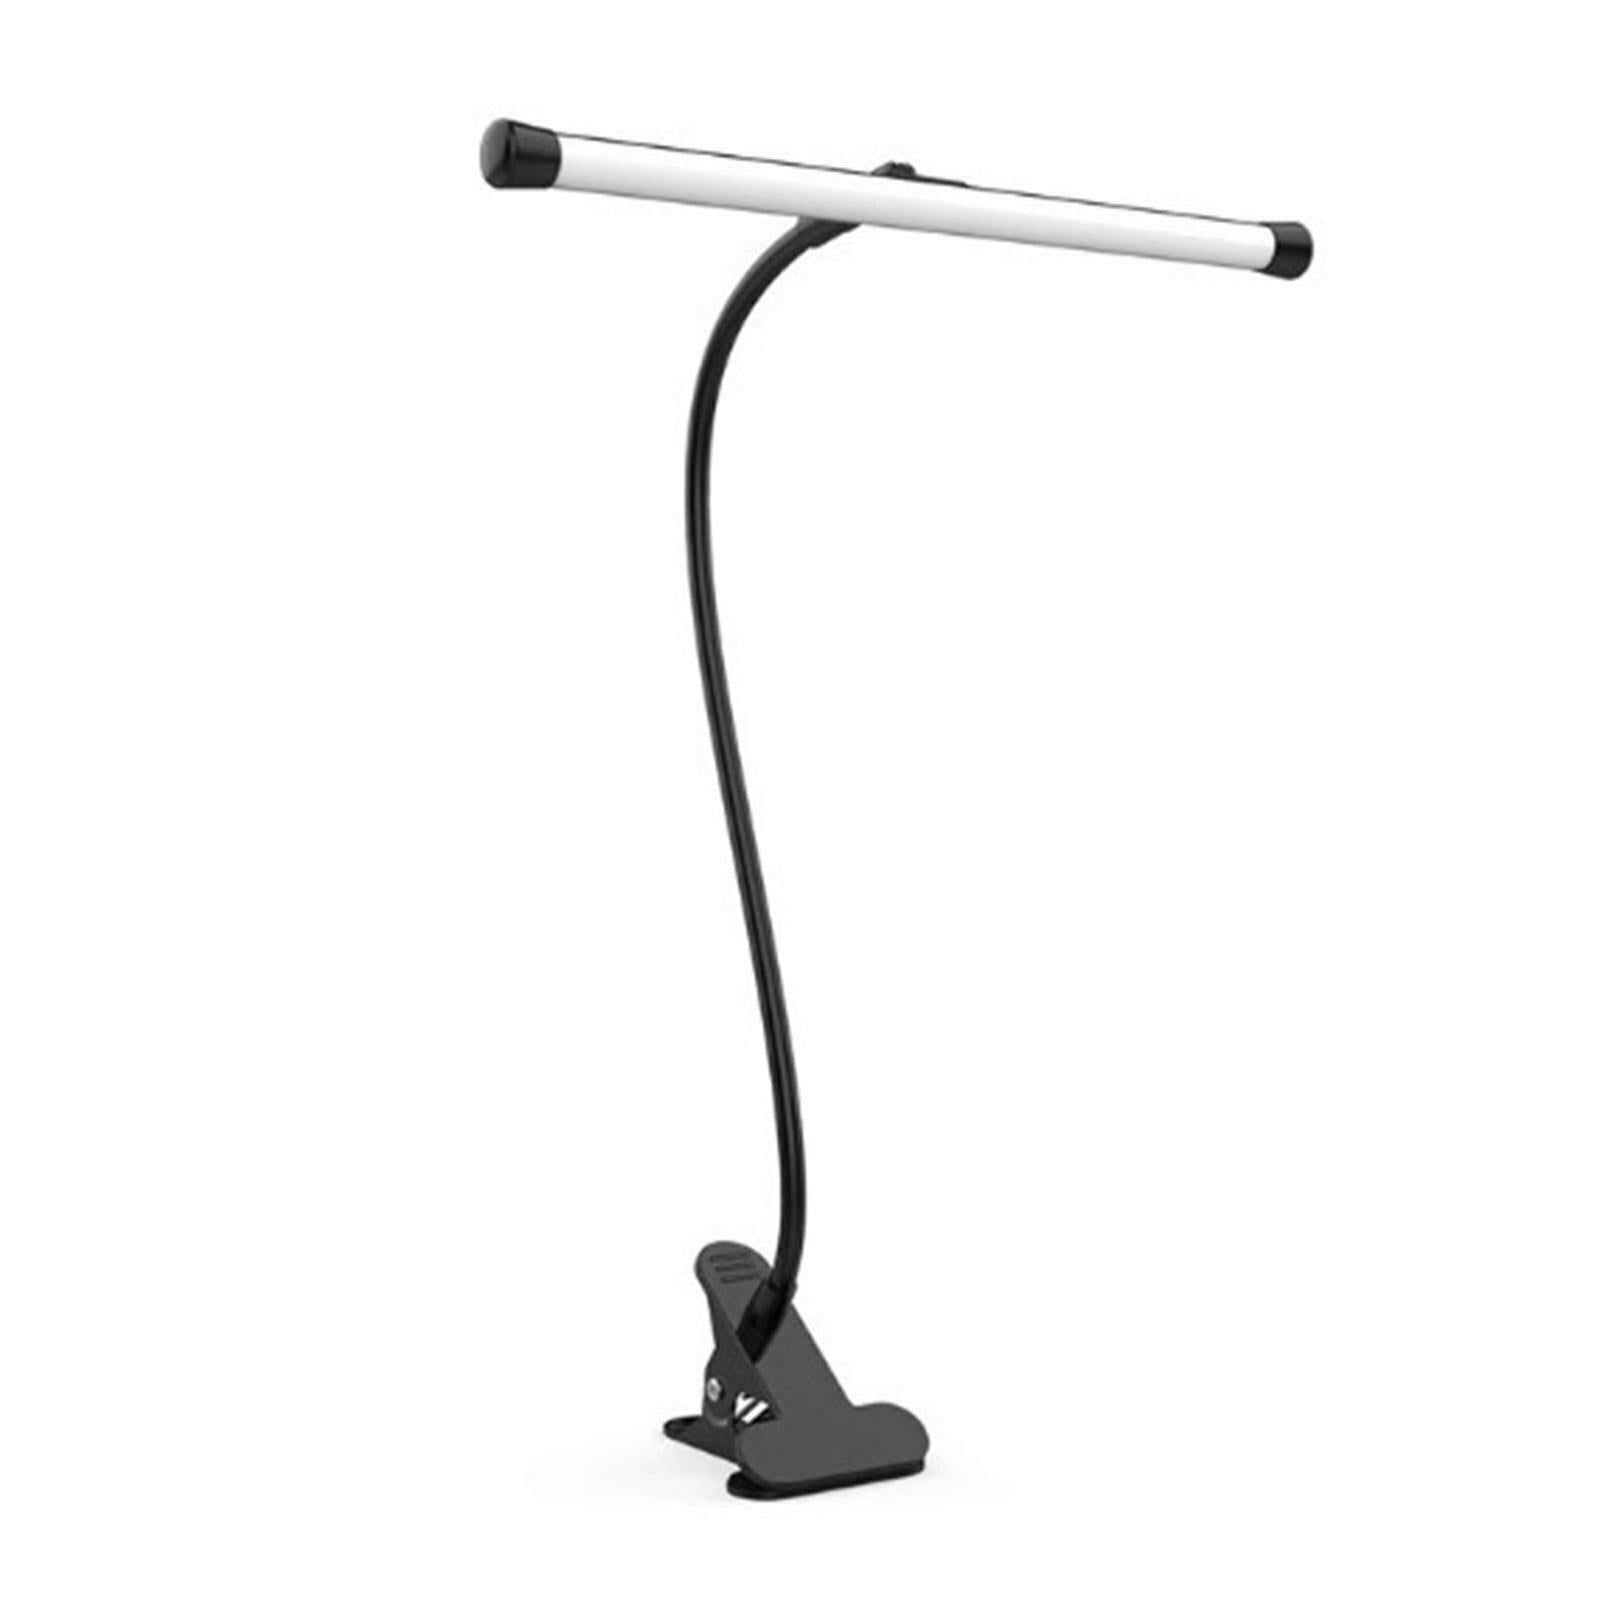 LED Desk Lamp, Metal Swing Arm Desk Lamp with Clamp, Eye-Caring Architect Desk